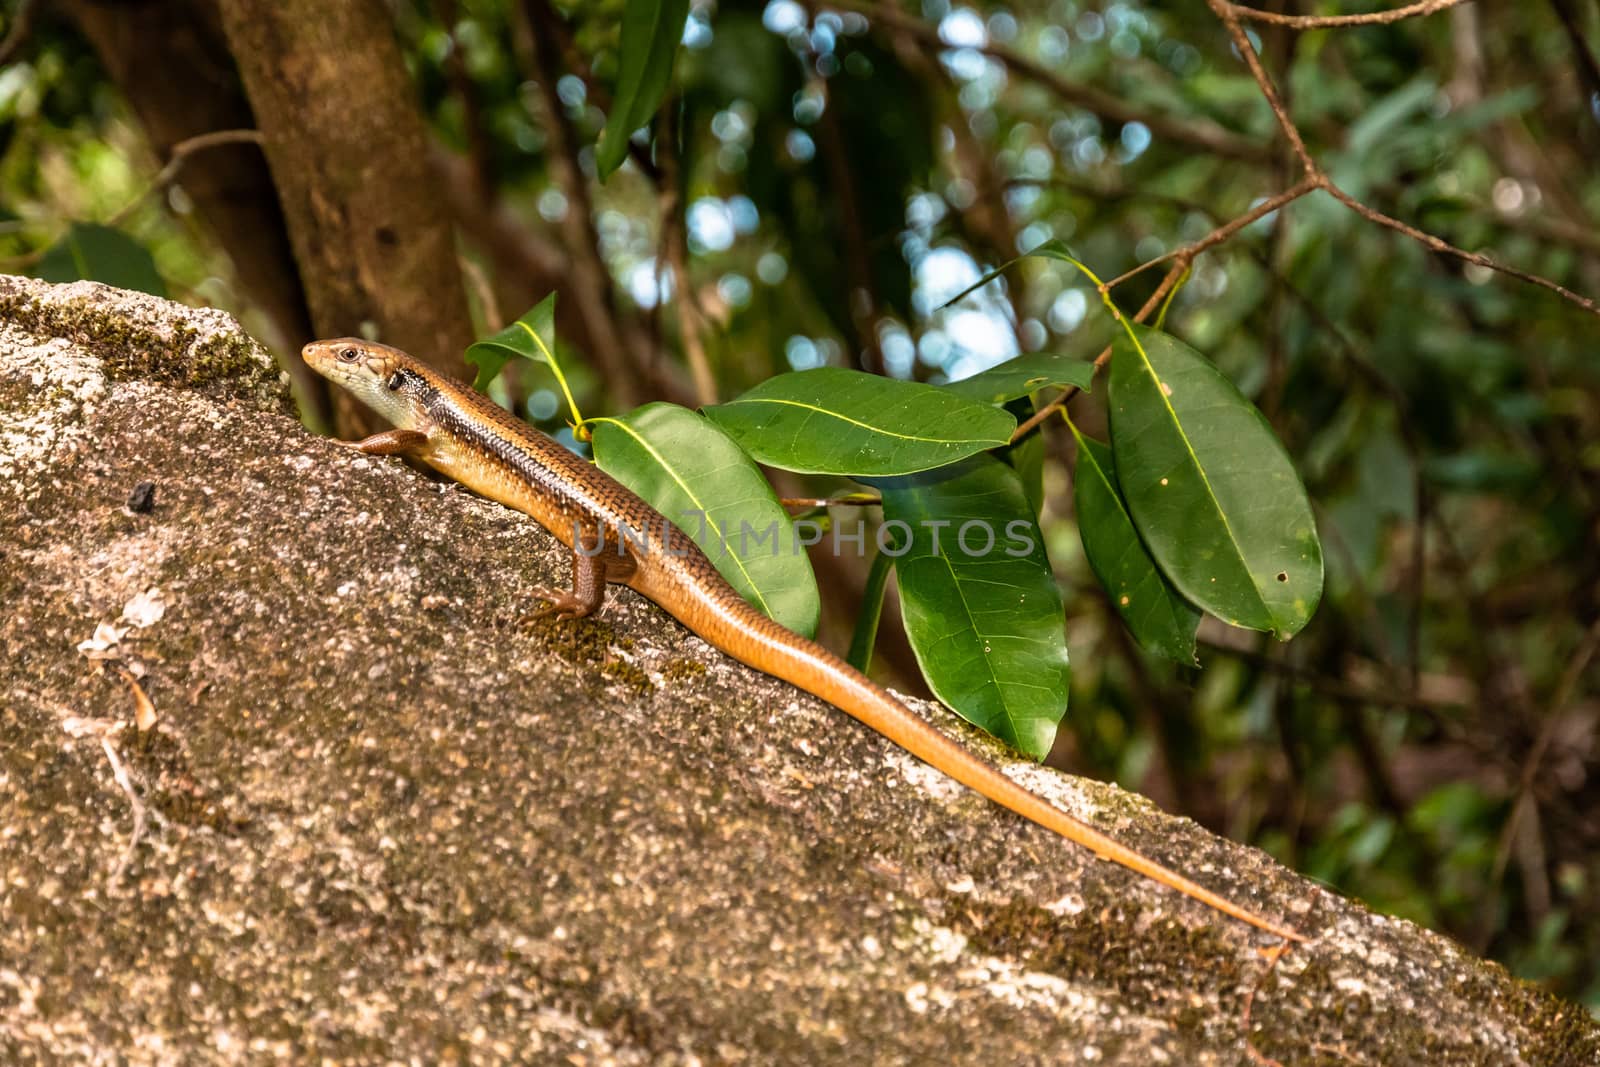 Carlia amax lizard on a rock in Fitzroy Island, Queensland, Australia